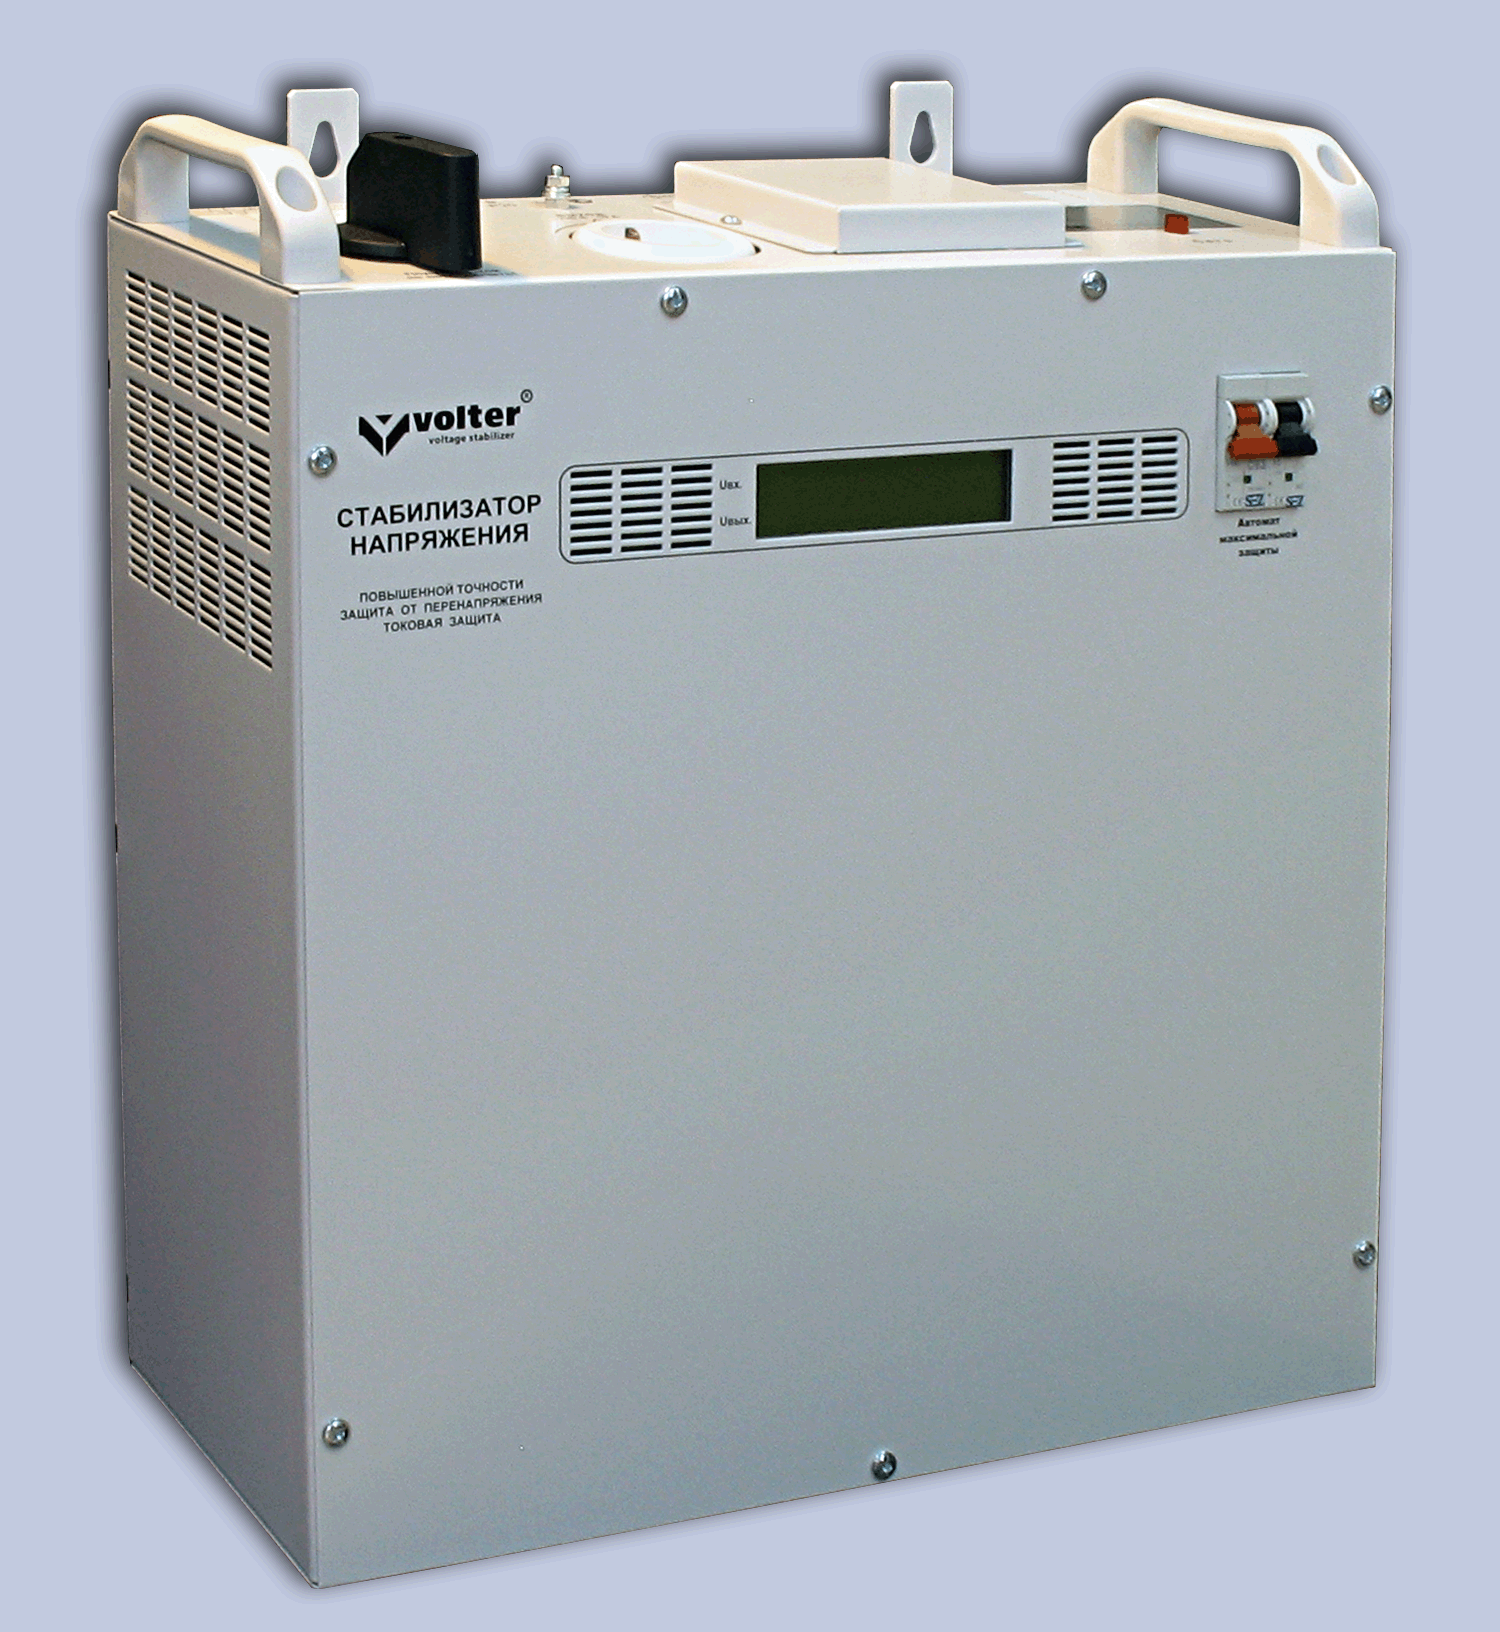 Стабилизатор 1-фазный СНПТО- 9 пттм, мощность 9кВт, размеры 450х420х190, масса 21кг